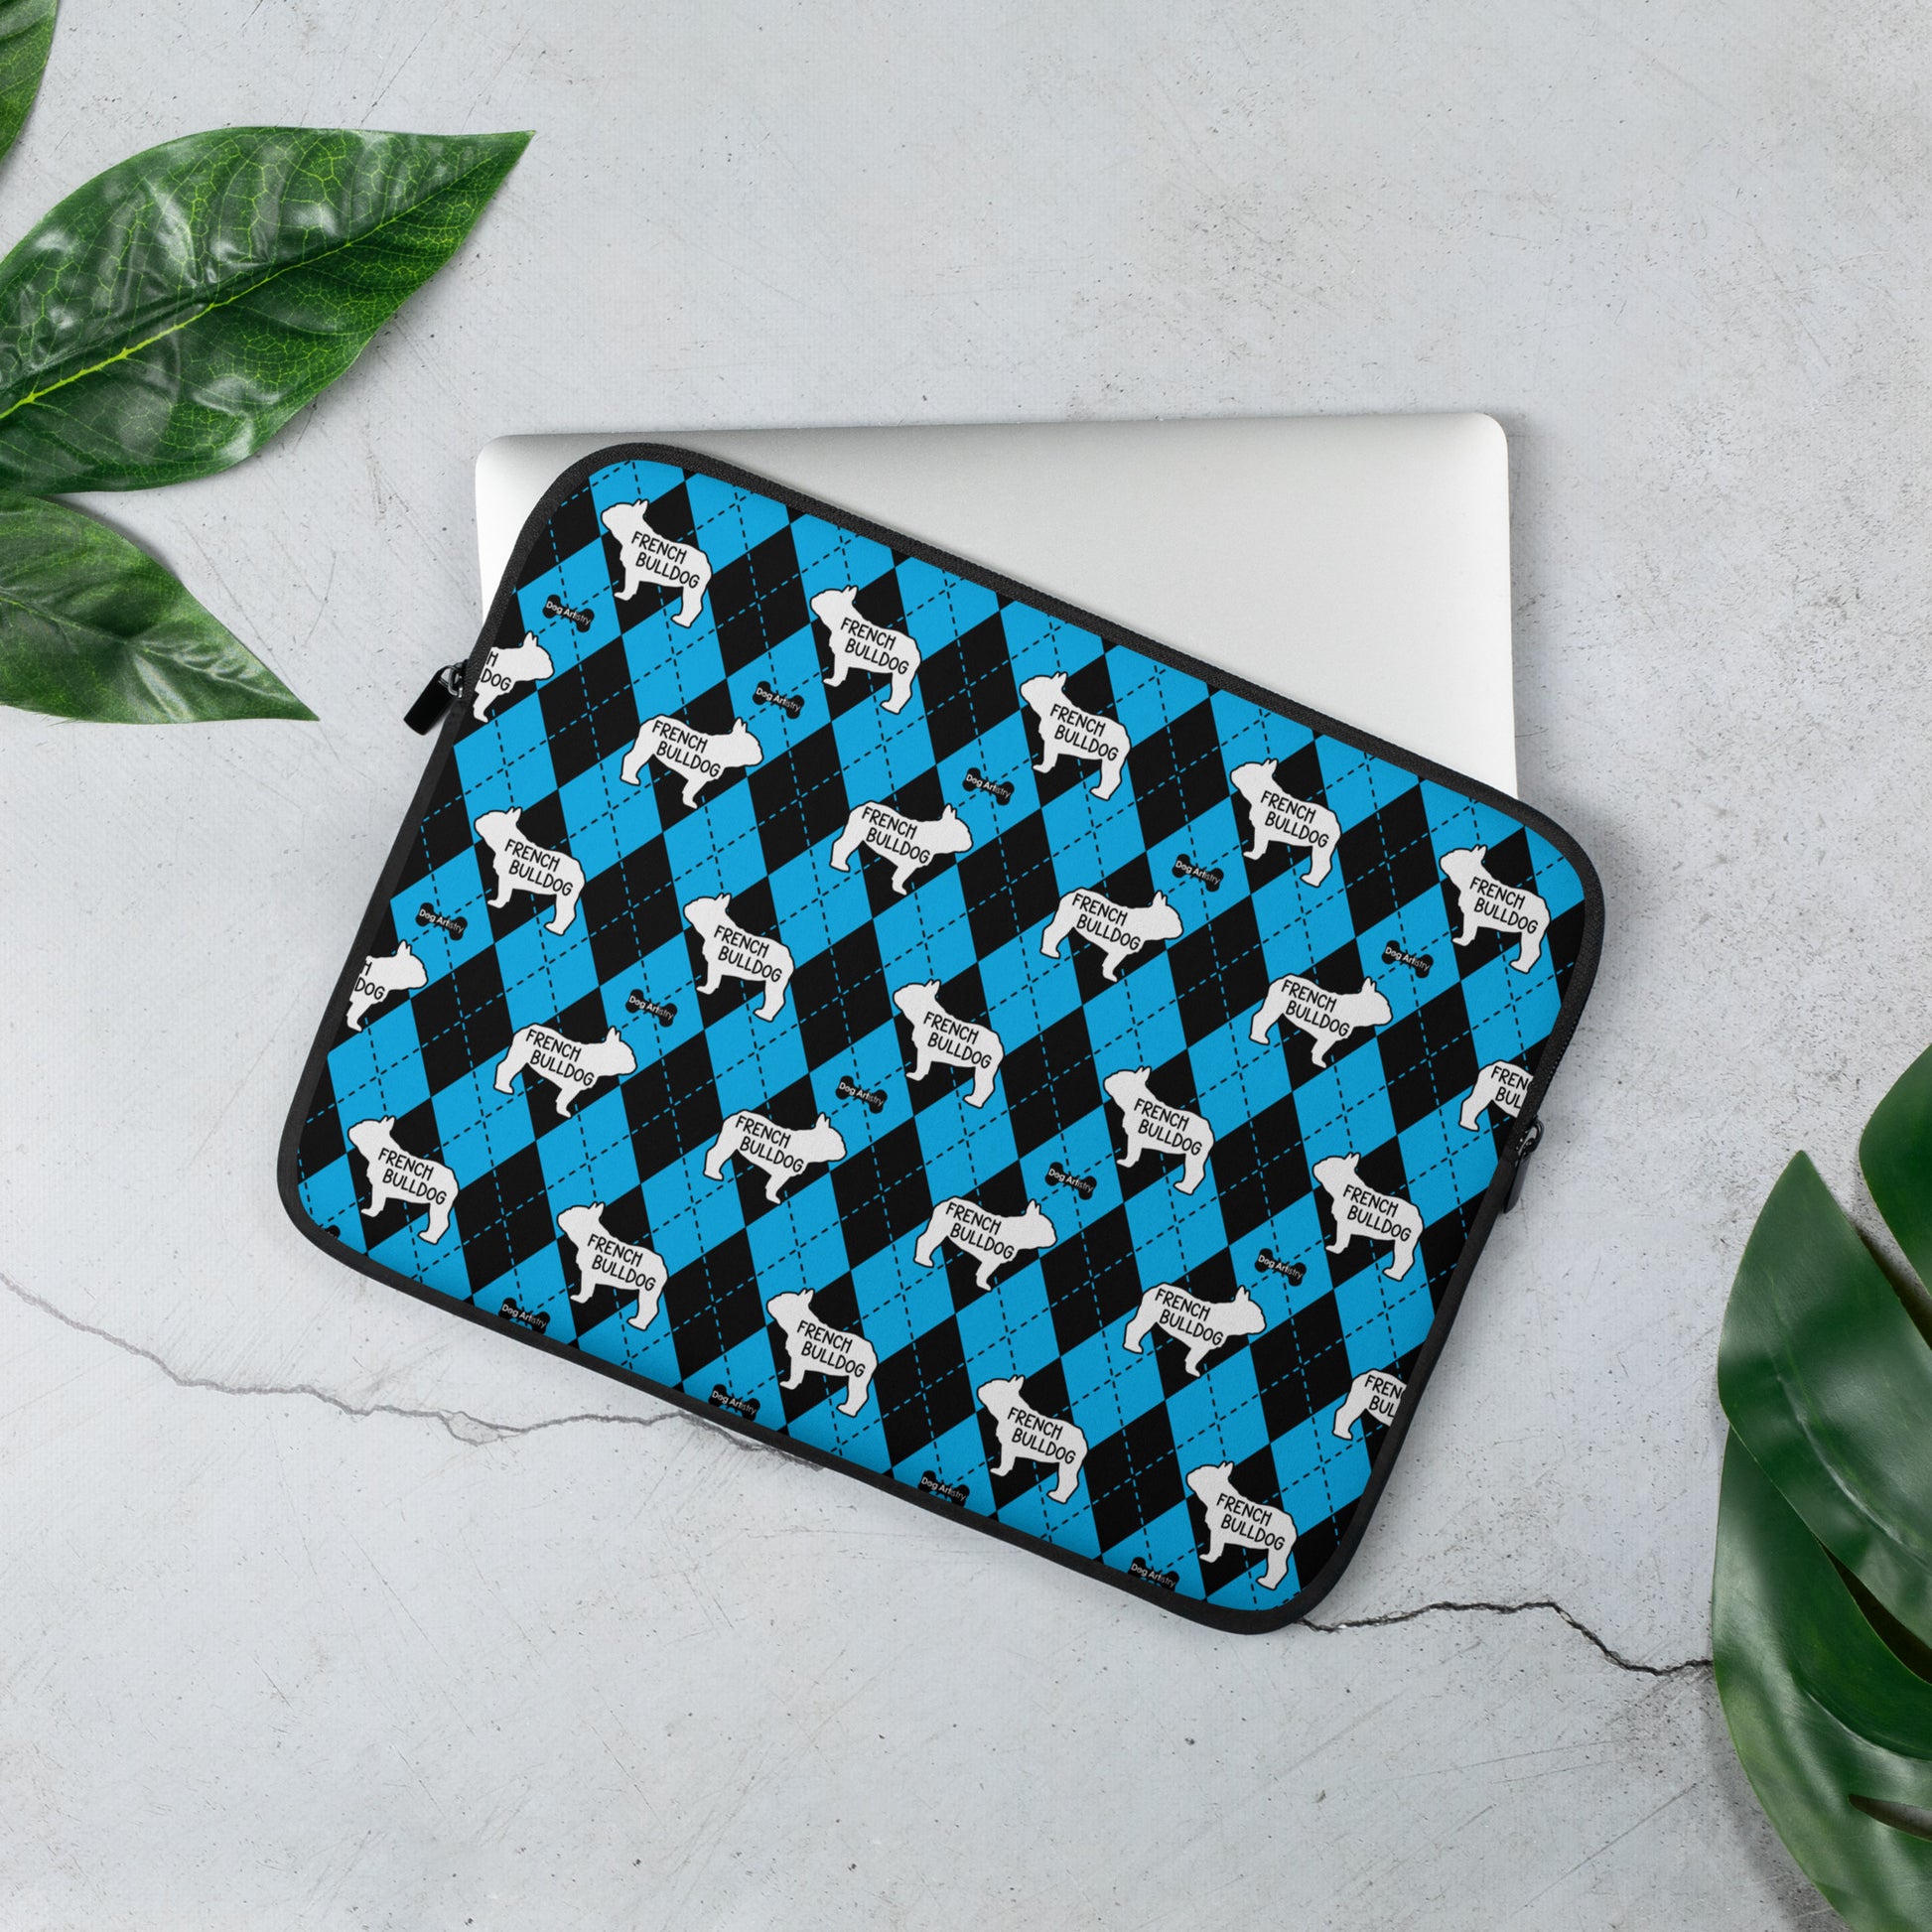 French Bulldog blue and black argyle laptop sleeve by Dog Artistry